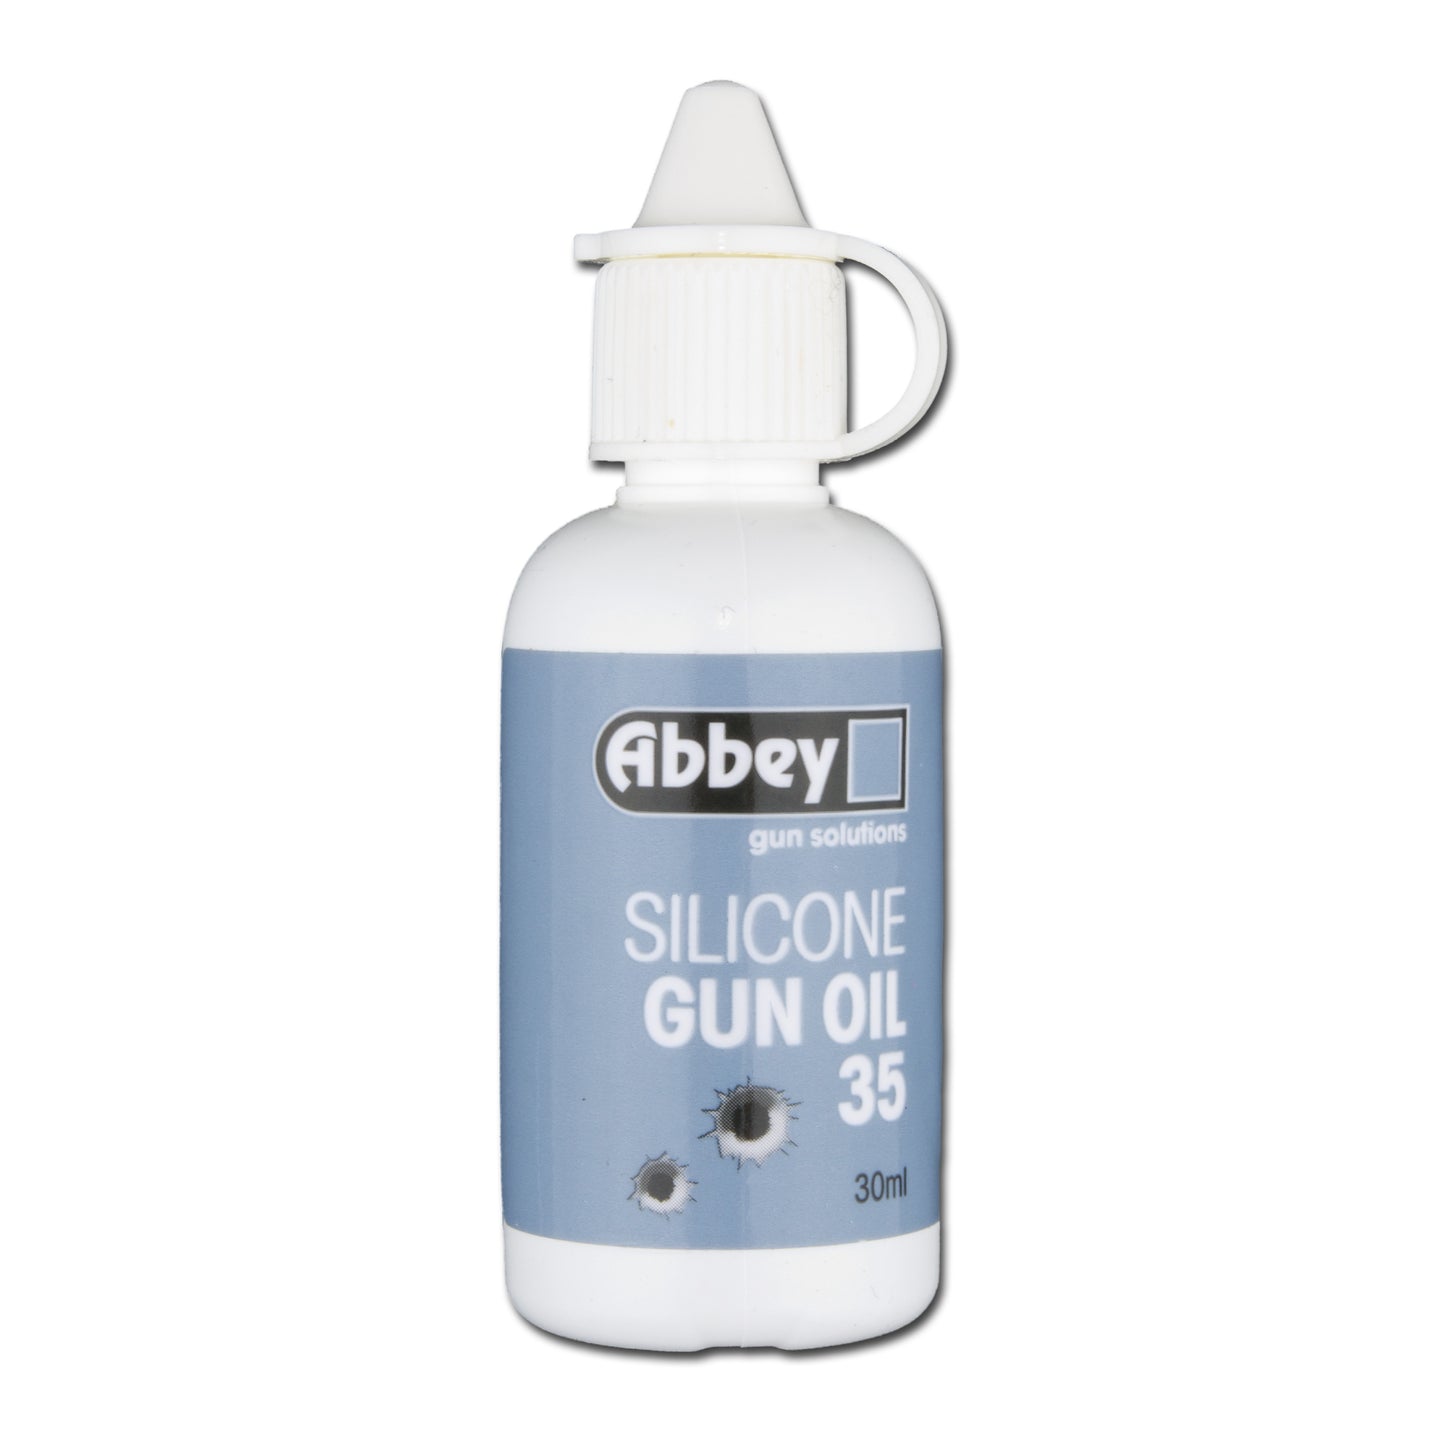 Abbey Silicone Gun Oil 35 ml